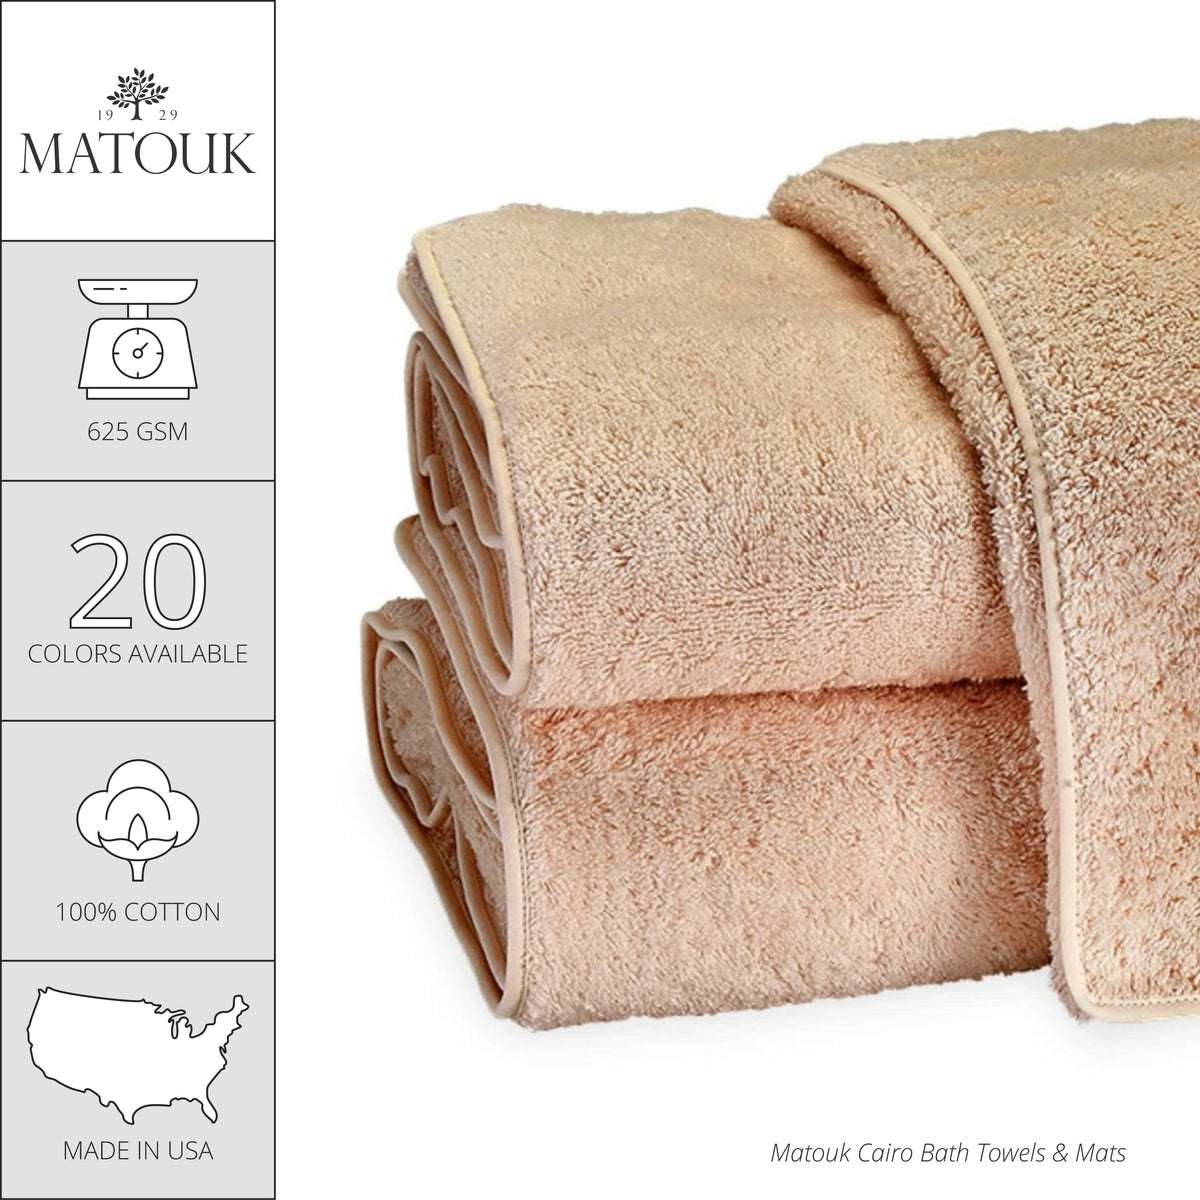 Matouk Cairo Bath Towels and Mats - Ivory/Ivory